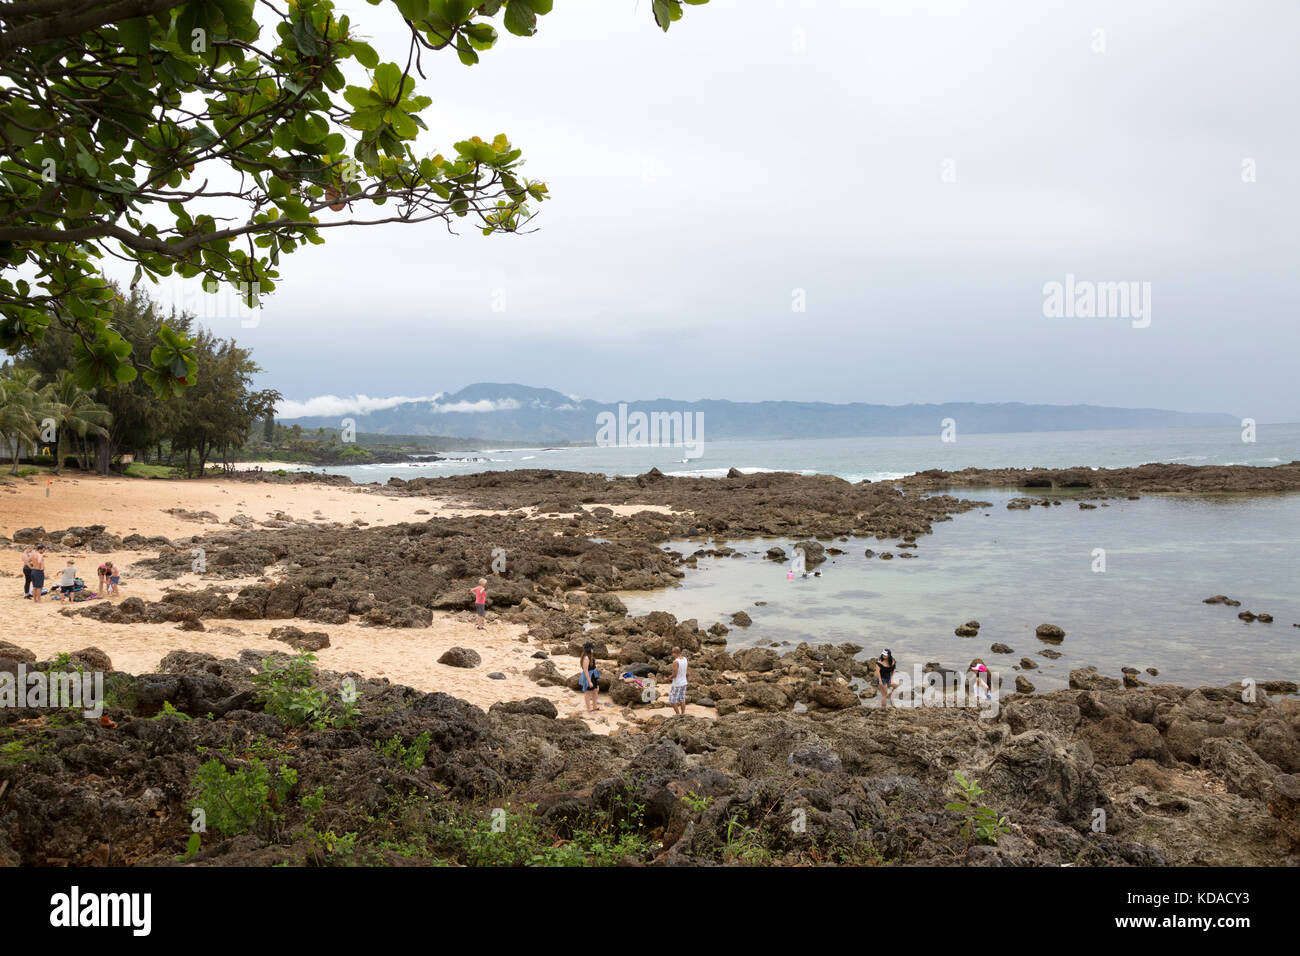 Tourists explore Sharks Cove, a beach along the North Shore of Oahu, Hawaii. Stock Photo